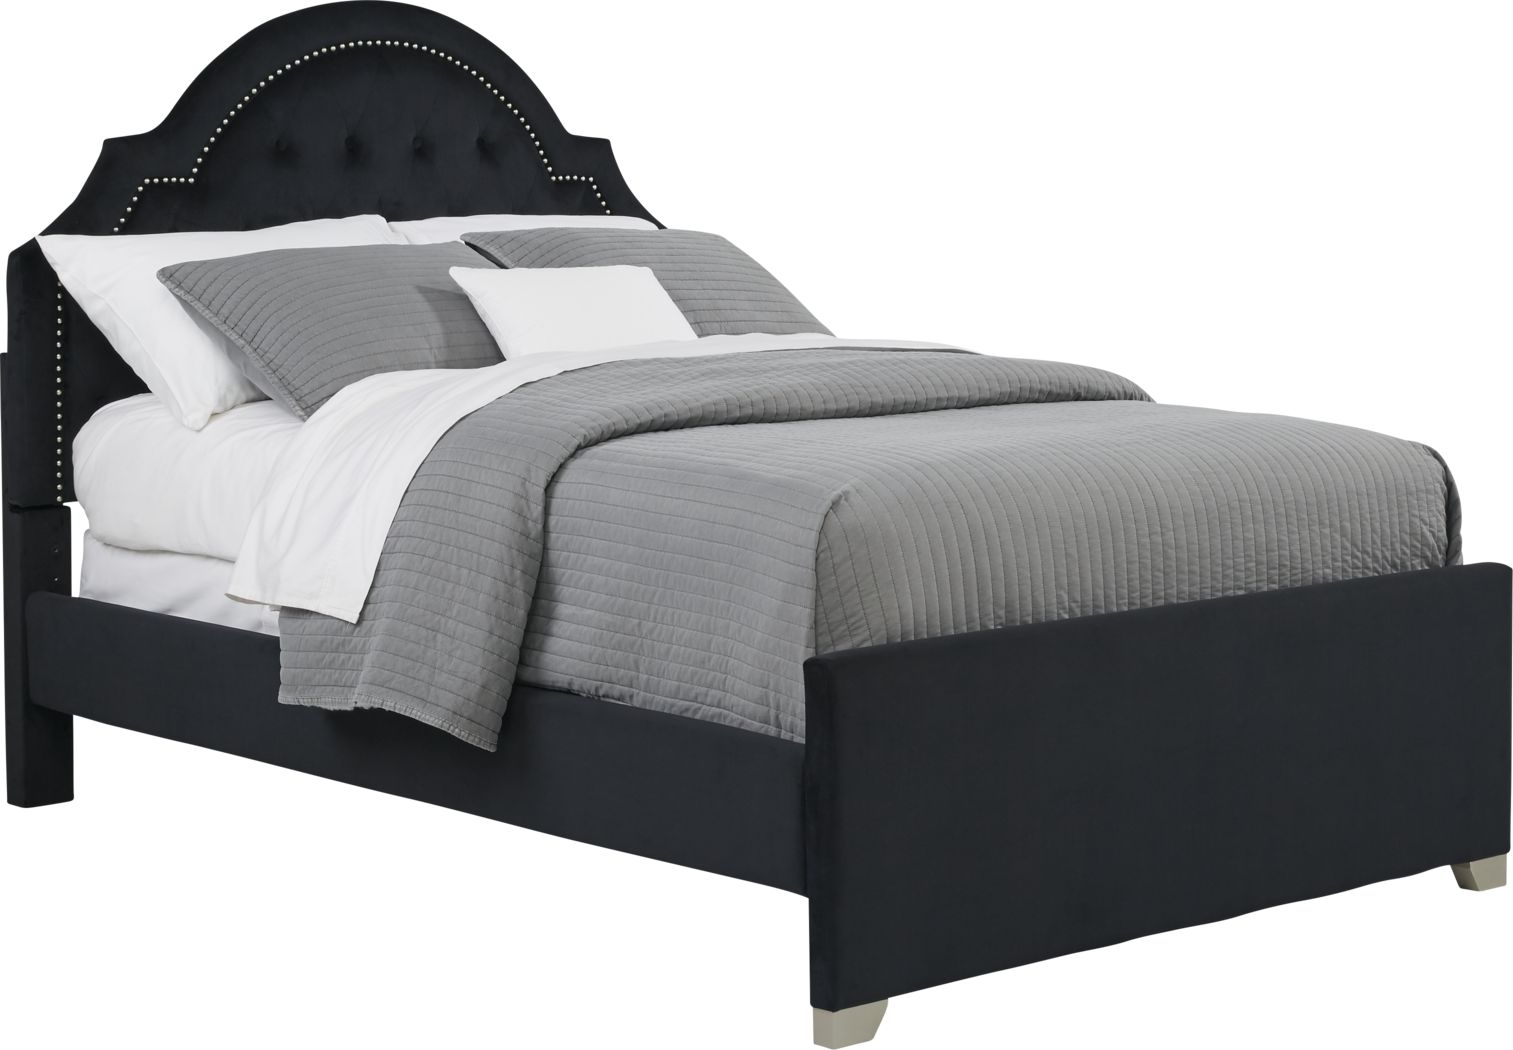 Black Twin Size Single Beds Frames, Black Upholstered Twin Bed Frame